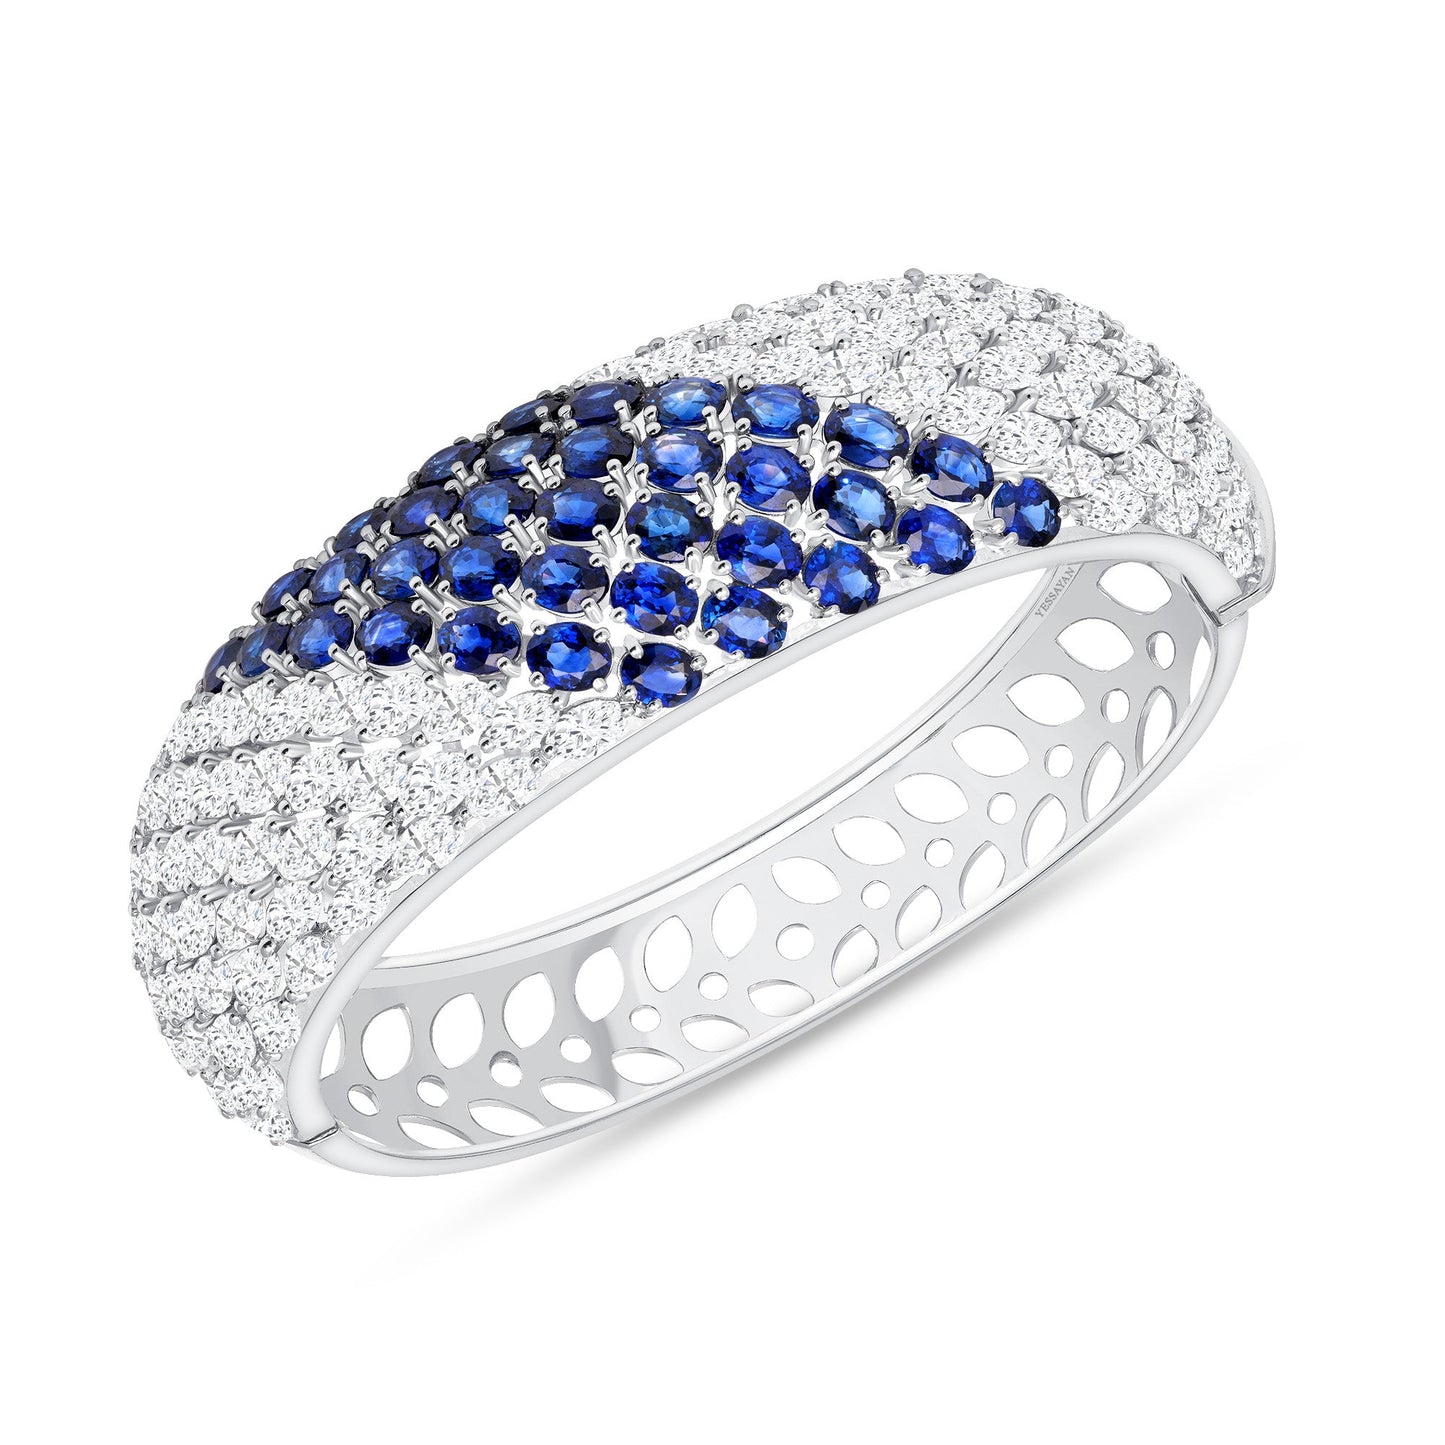 Marquise Diamonds & Oval Sapphires Bangle Bracelet